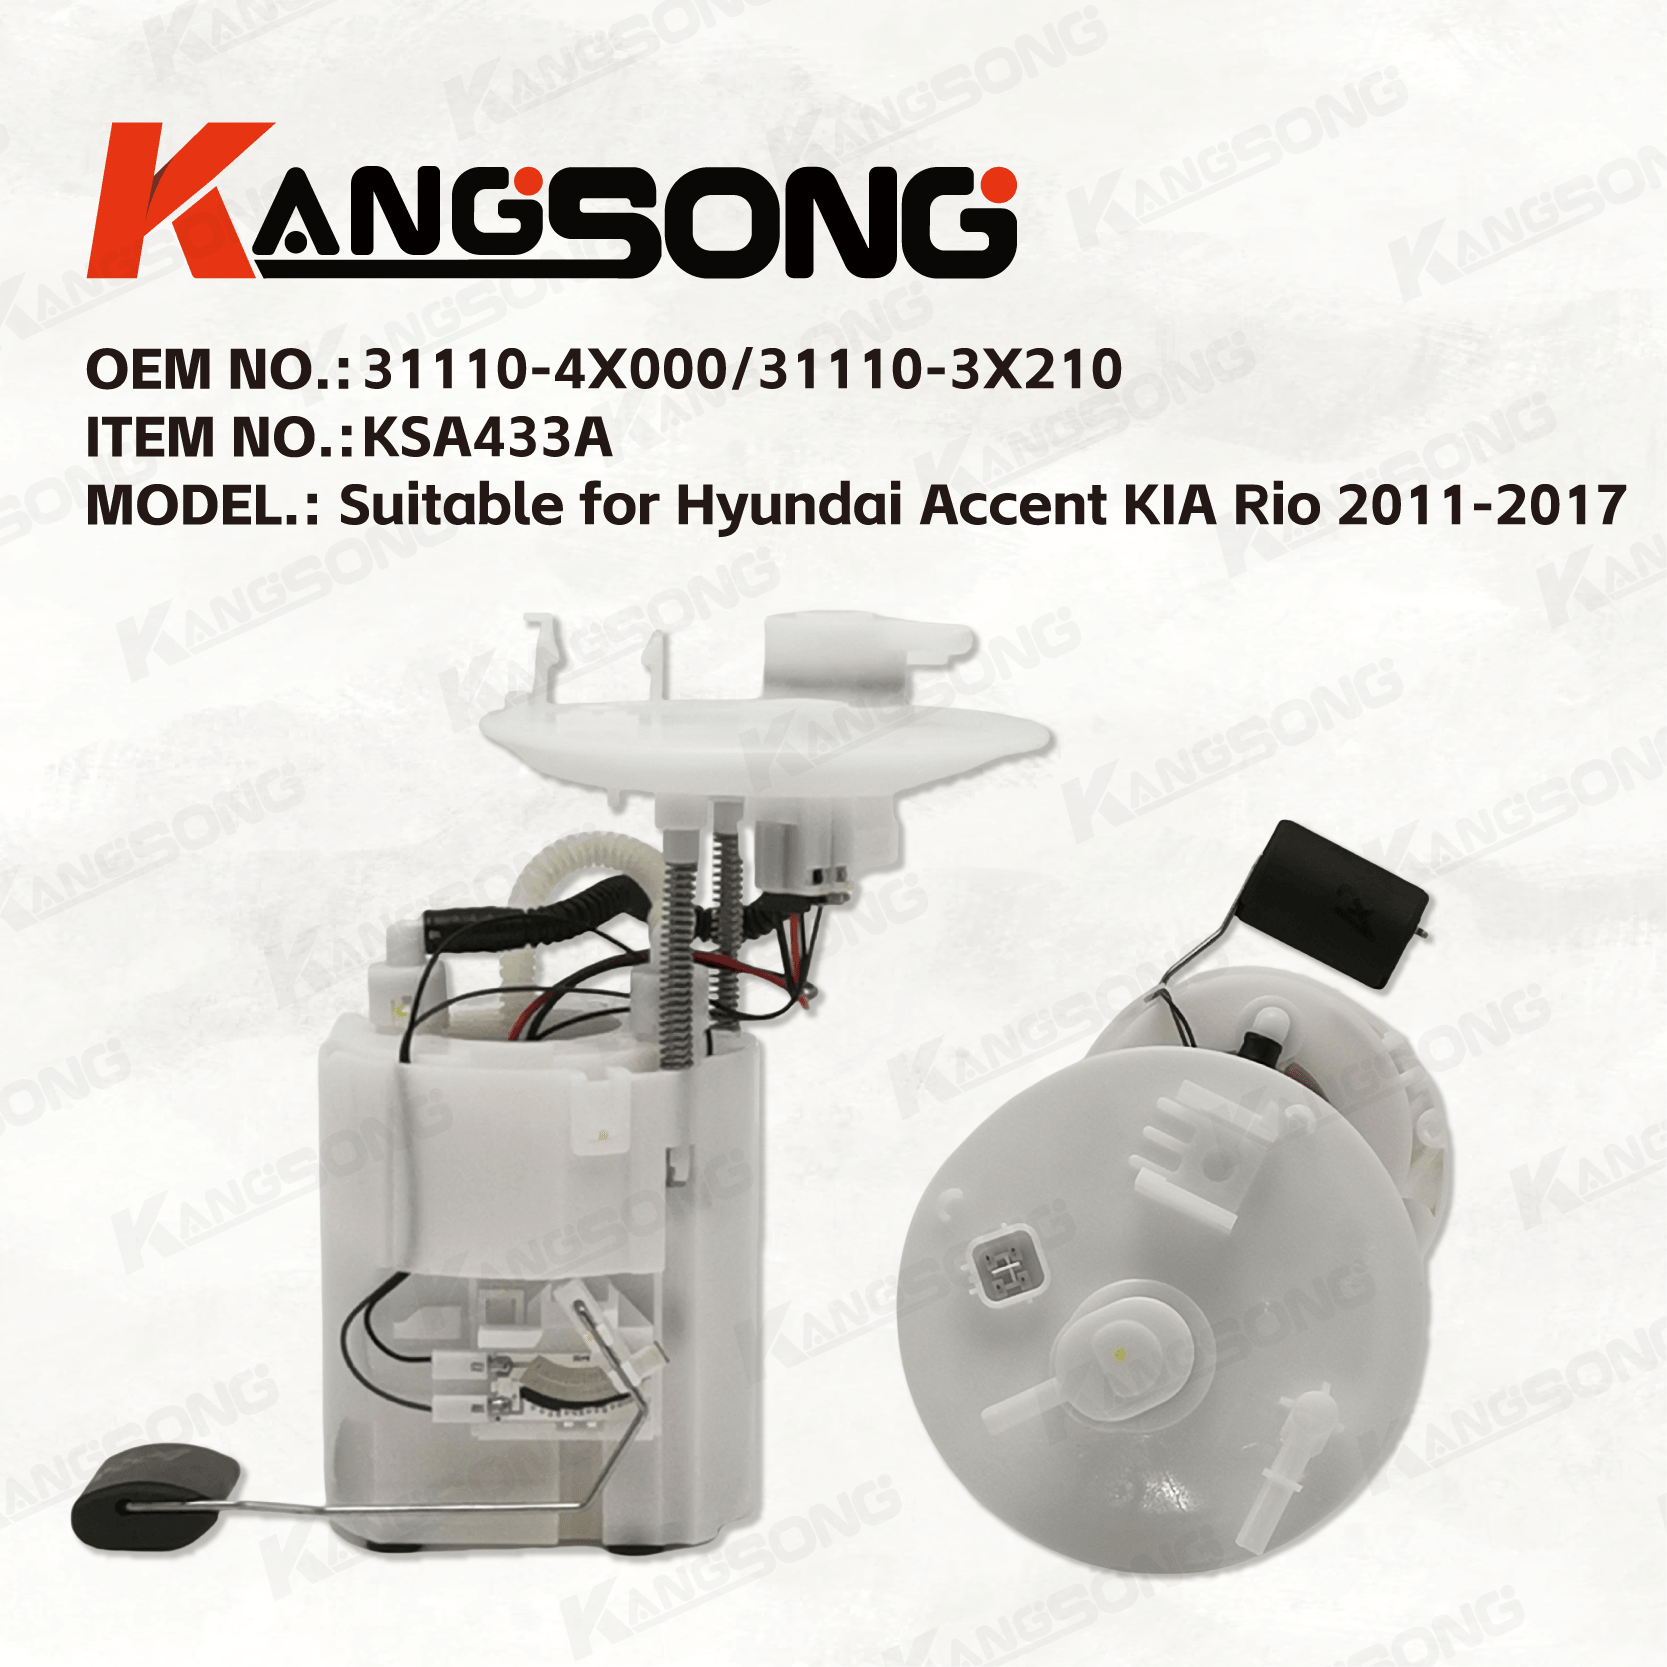 Applicable to  Hyundai Accent KIA Rio 2011-2017/31110-4X000 31110-3X210 /Automotive Fuel Pump Assembly